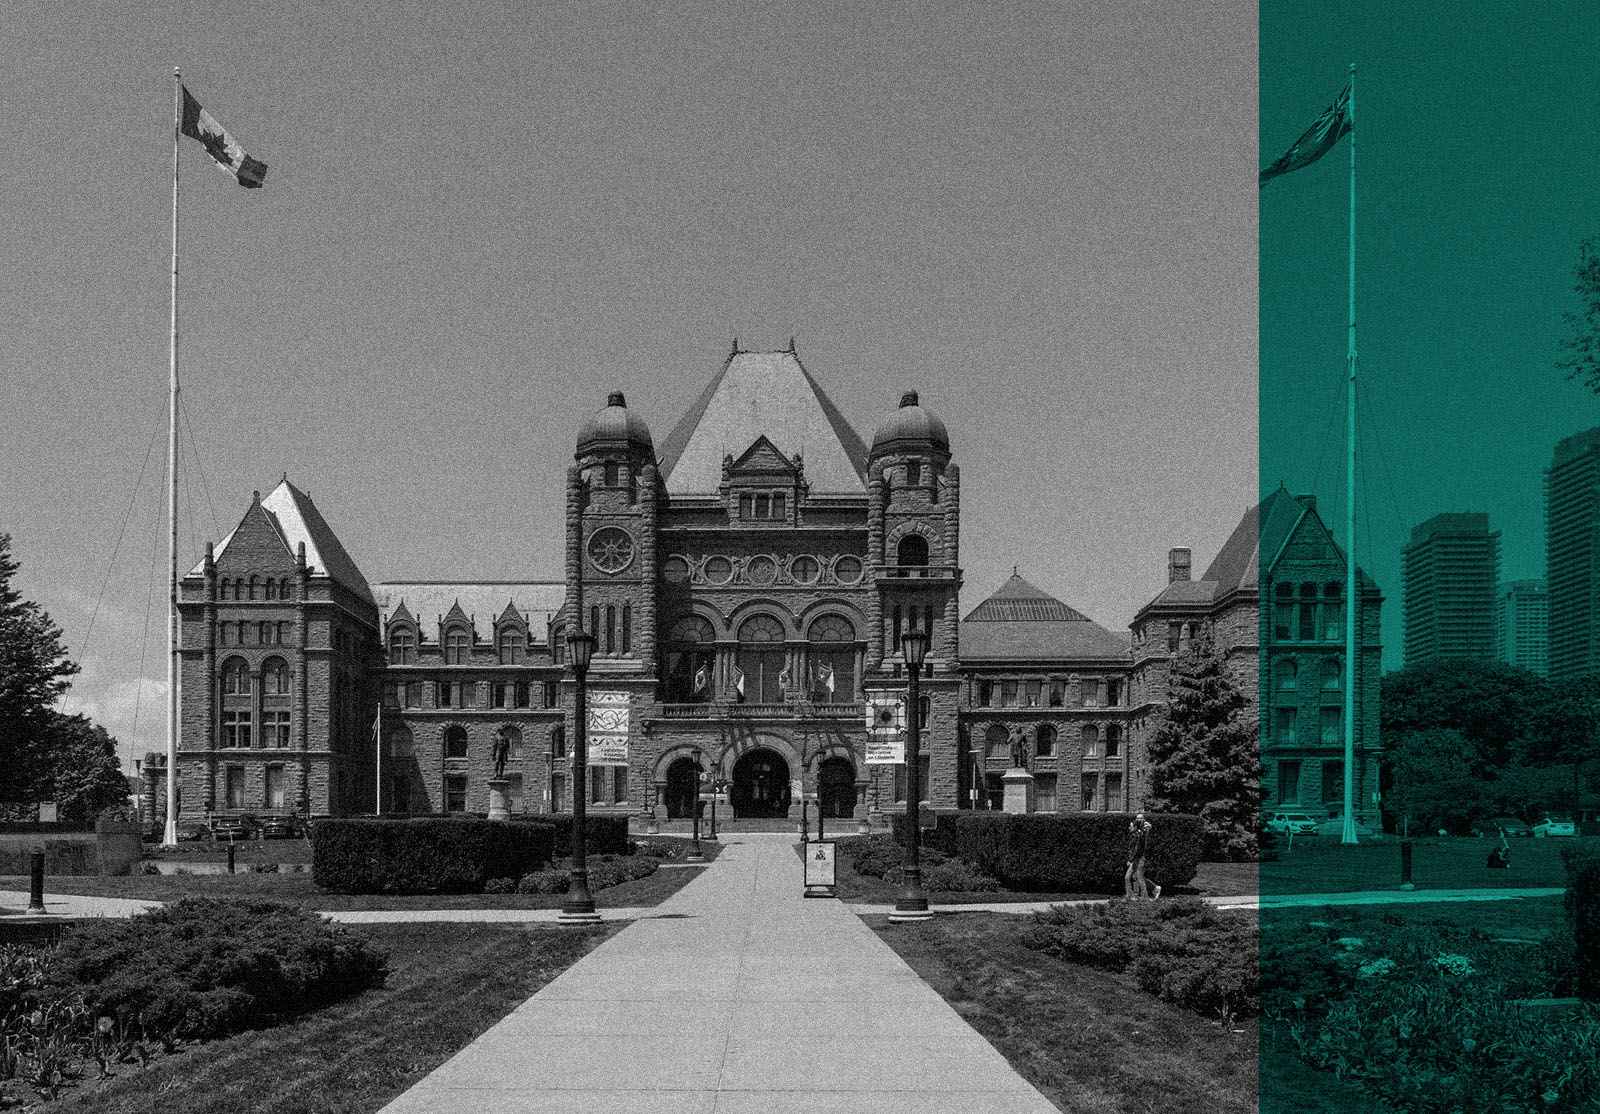 Queen's Park, Toronto - Ontario's Provincial Legislature